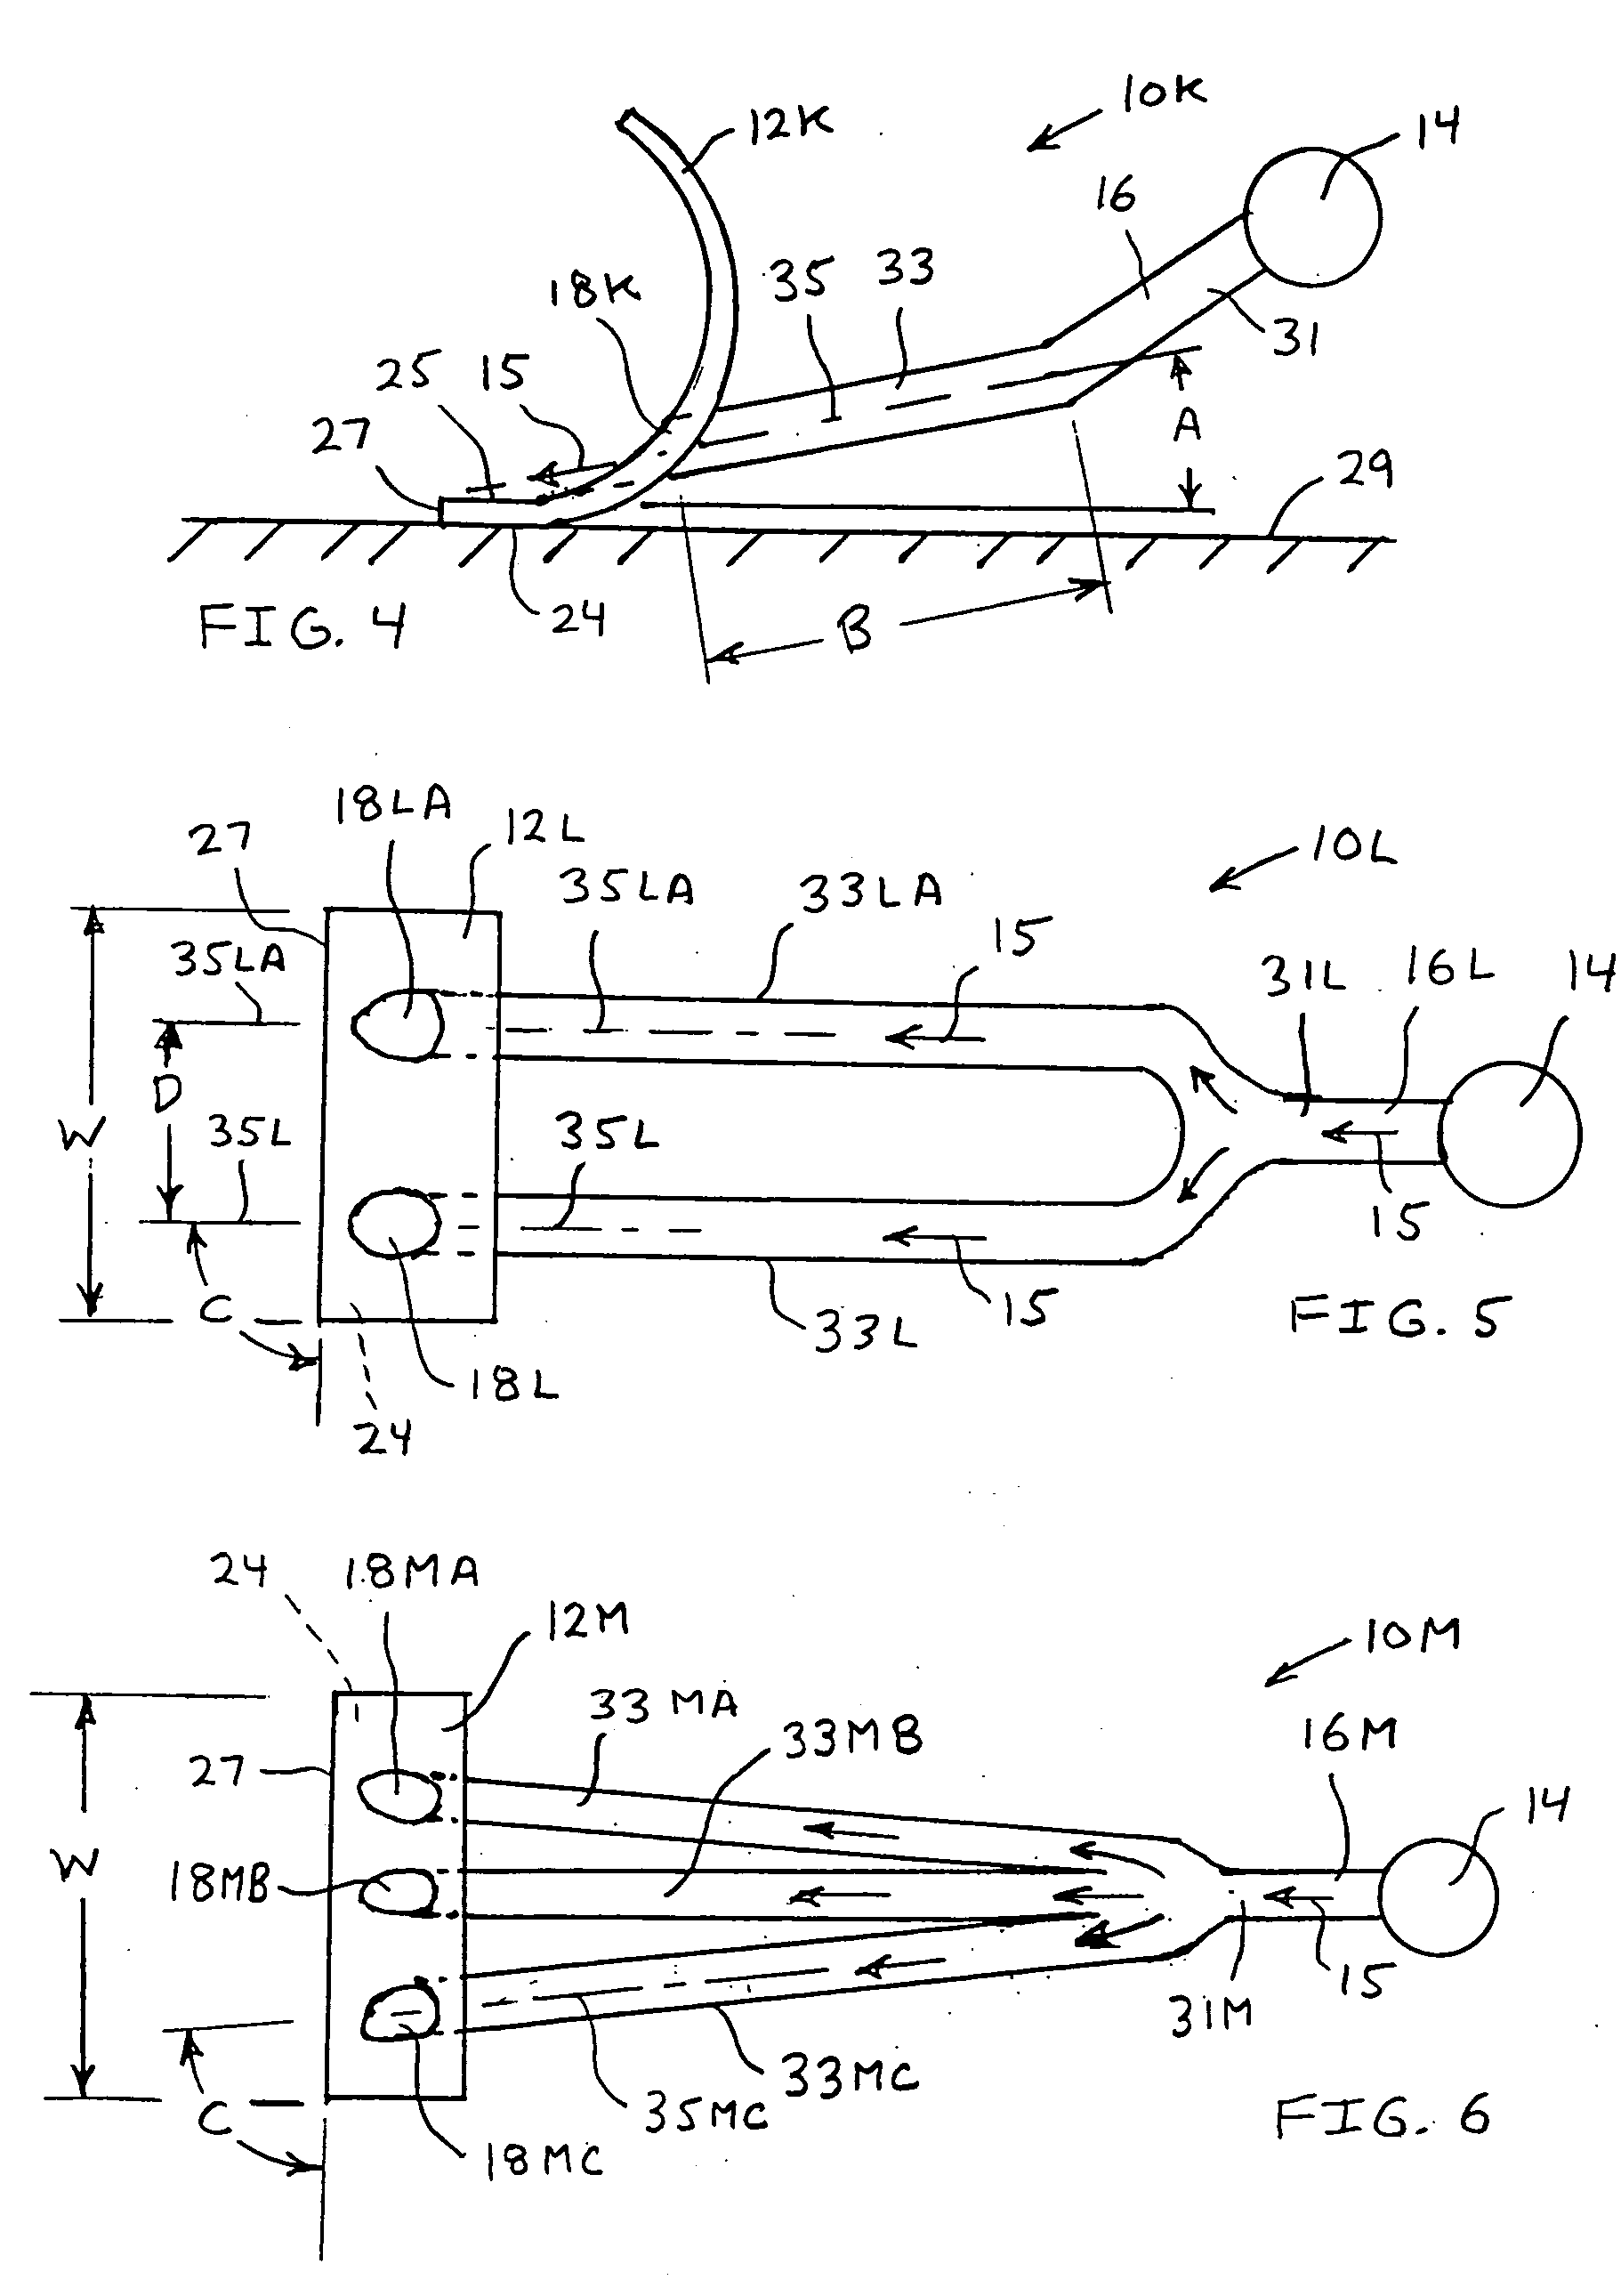 Fluid shovel apparatus and method